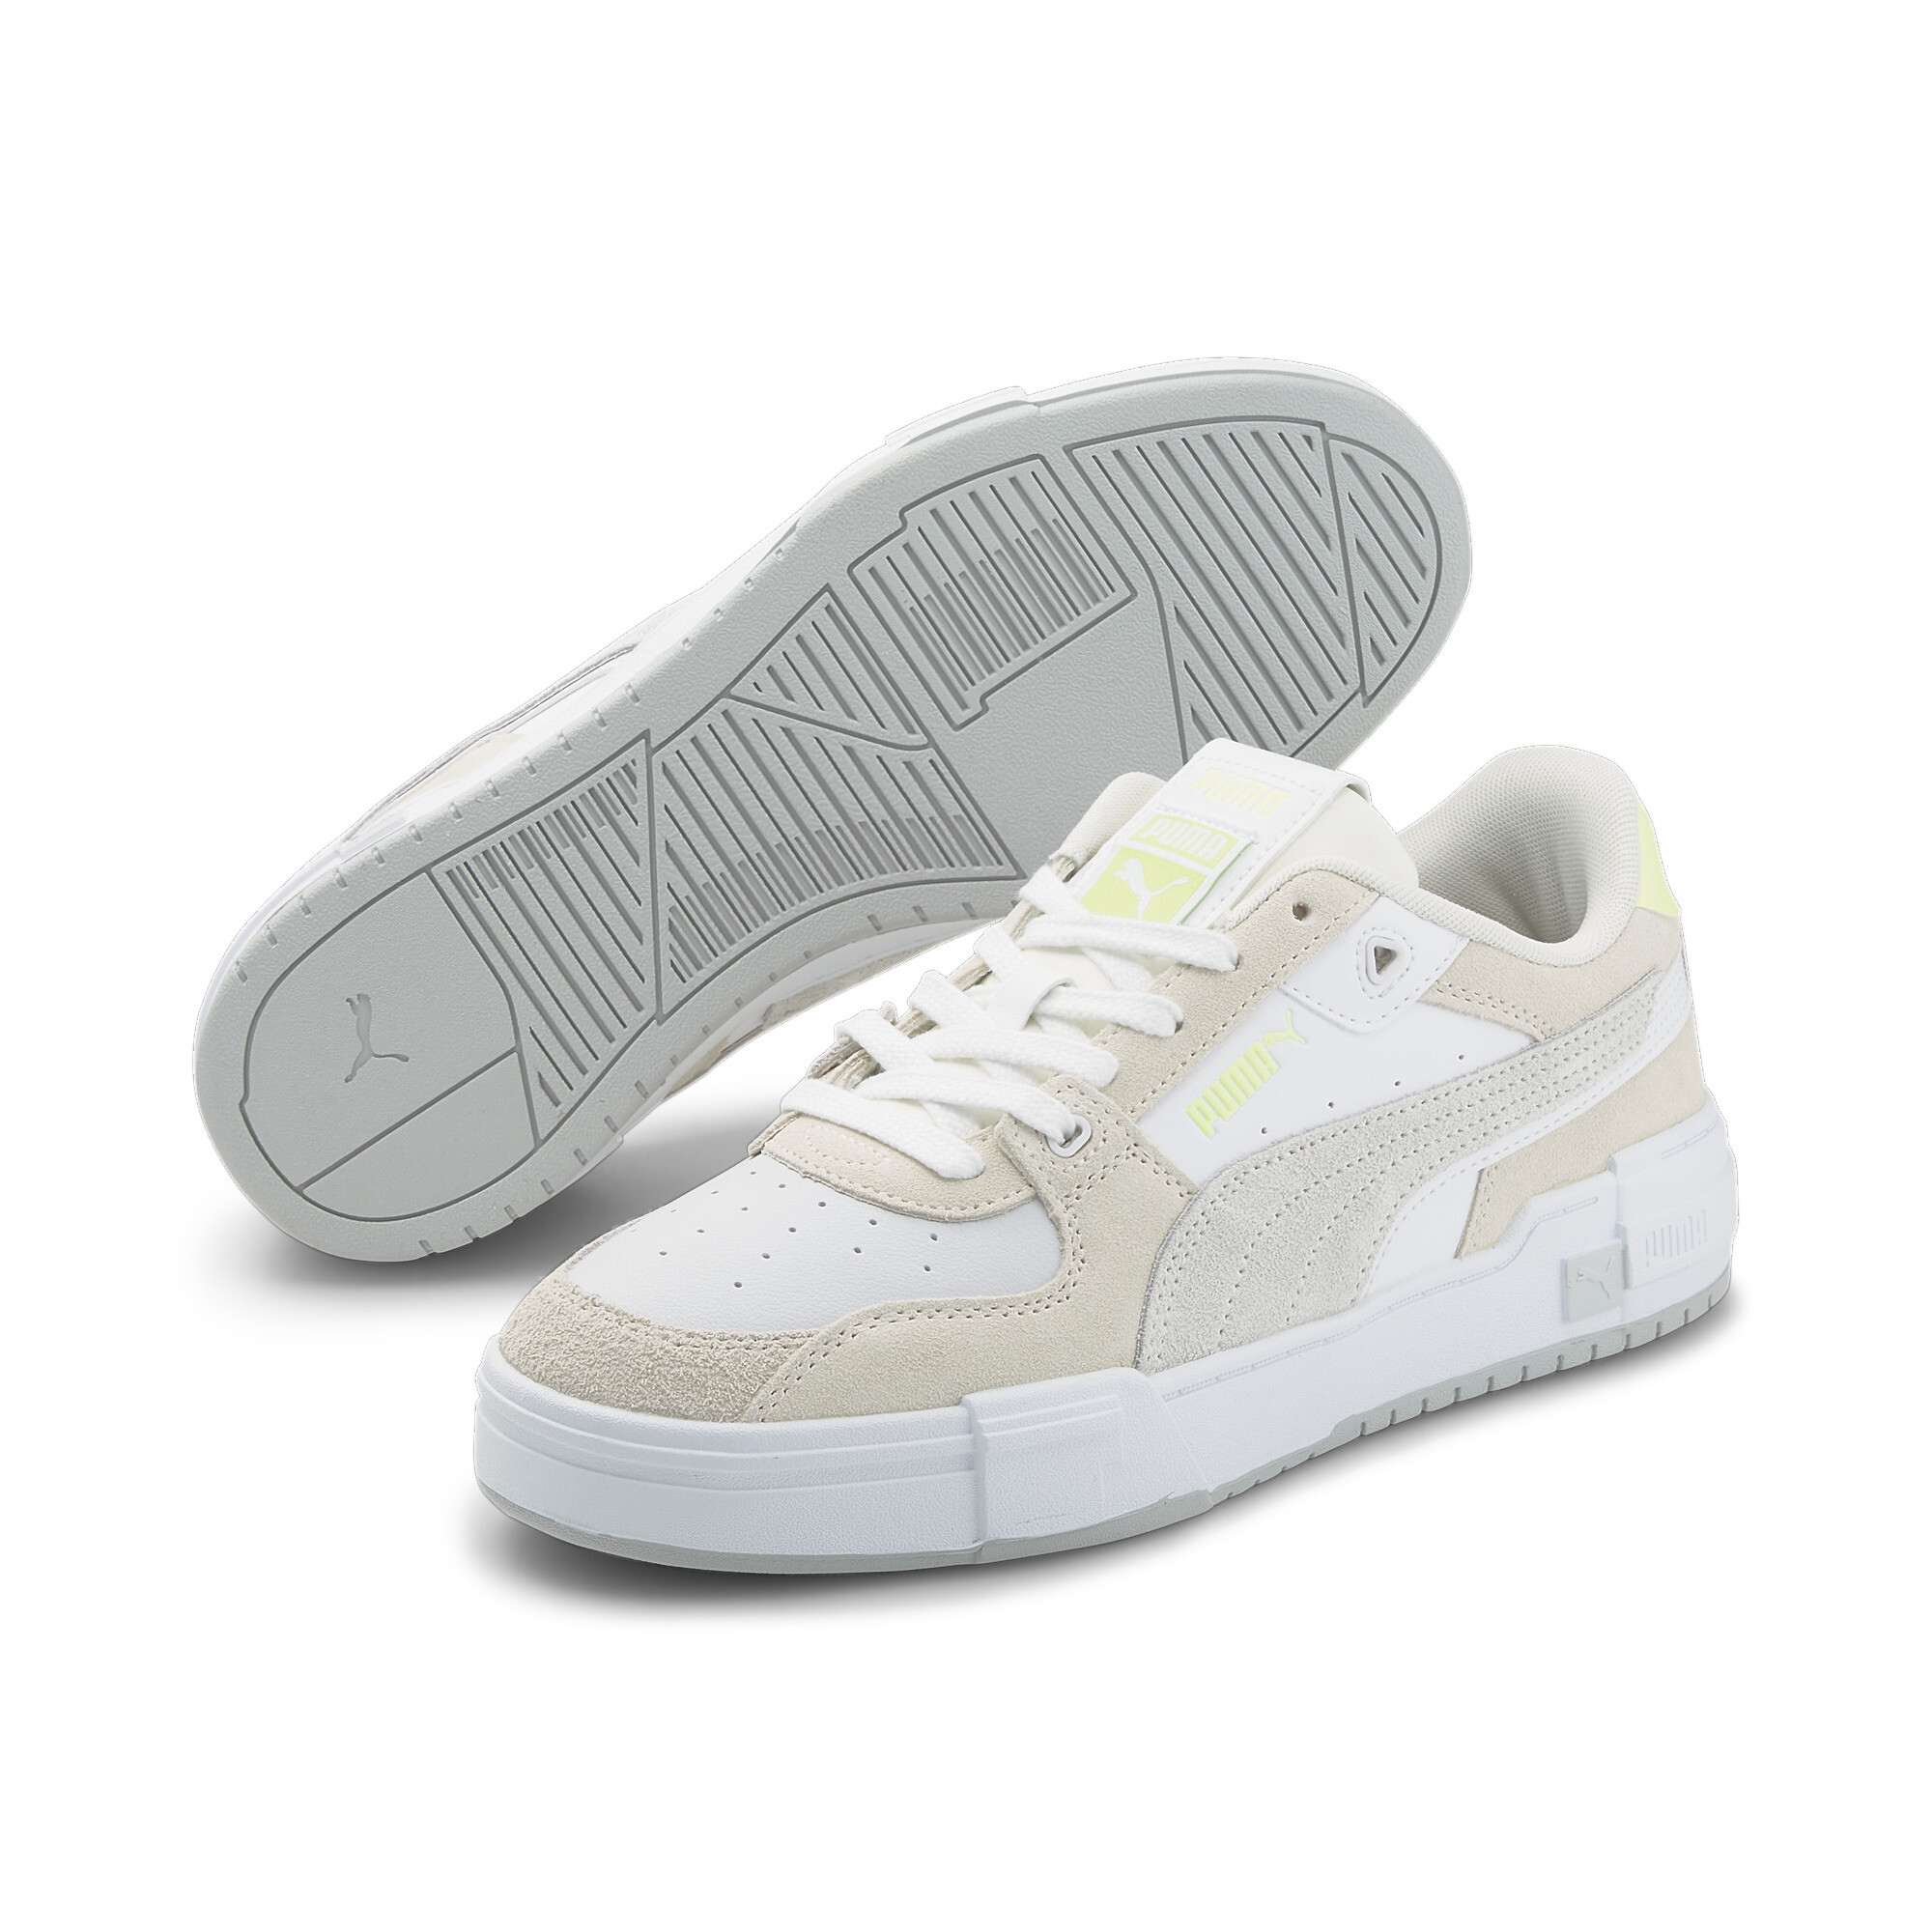 Men's Puma CA Pro Glitch Suede Sneakers, White, Size 42.5, Shoes